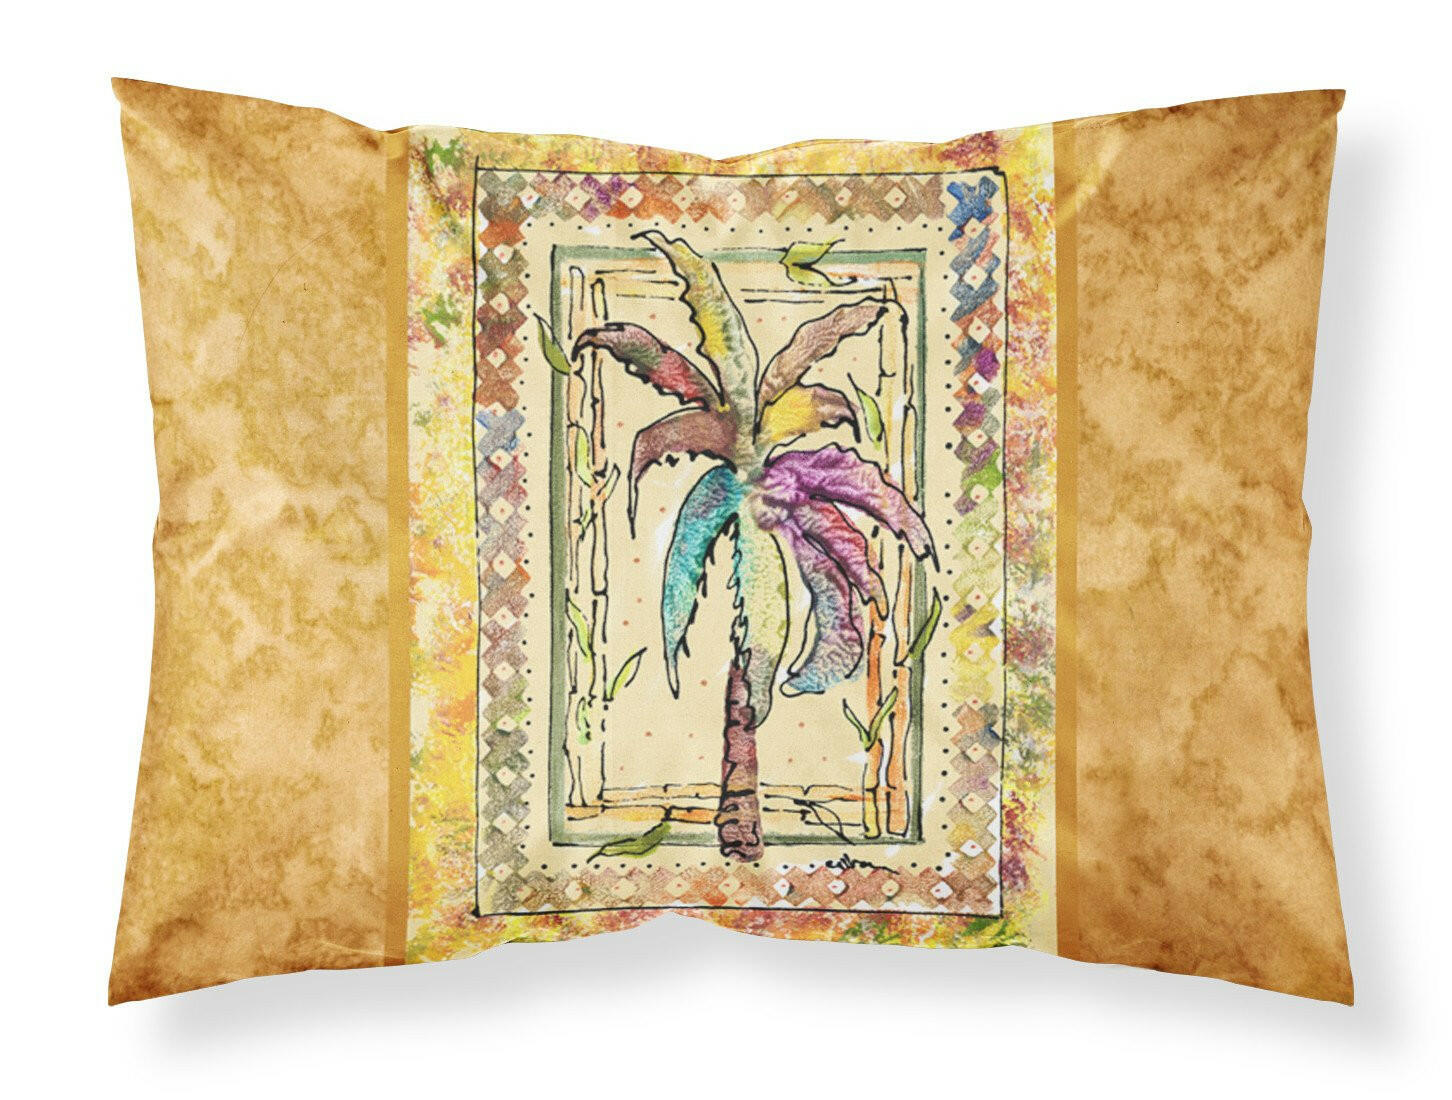 Palm Tree  Moisture wicking Fabric standard pillowcase by Caroline's Treasures